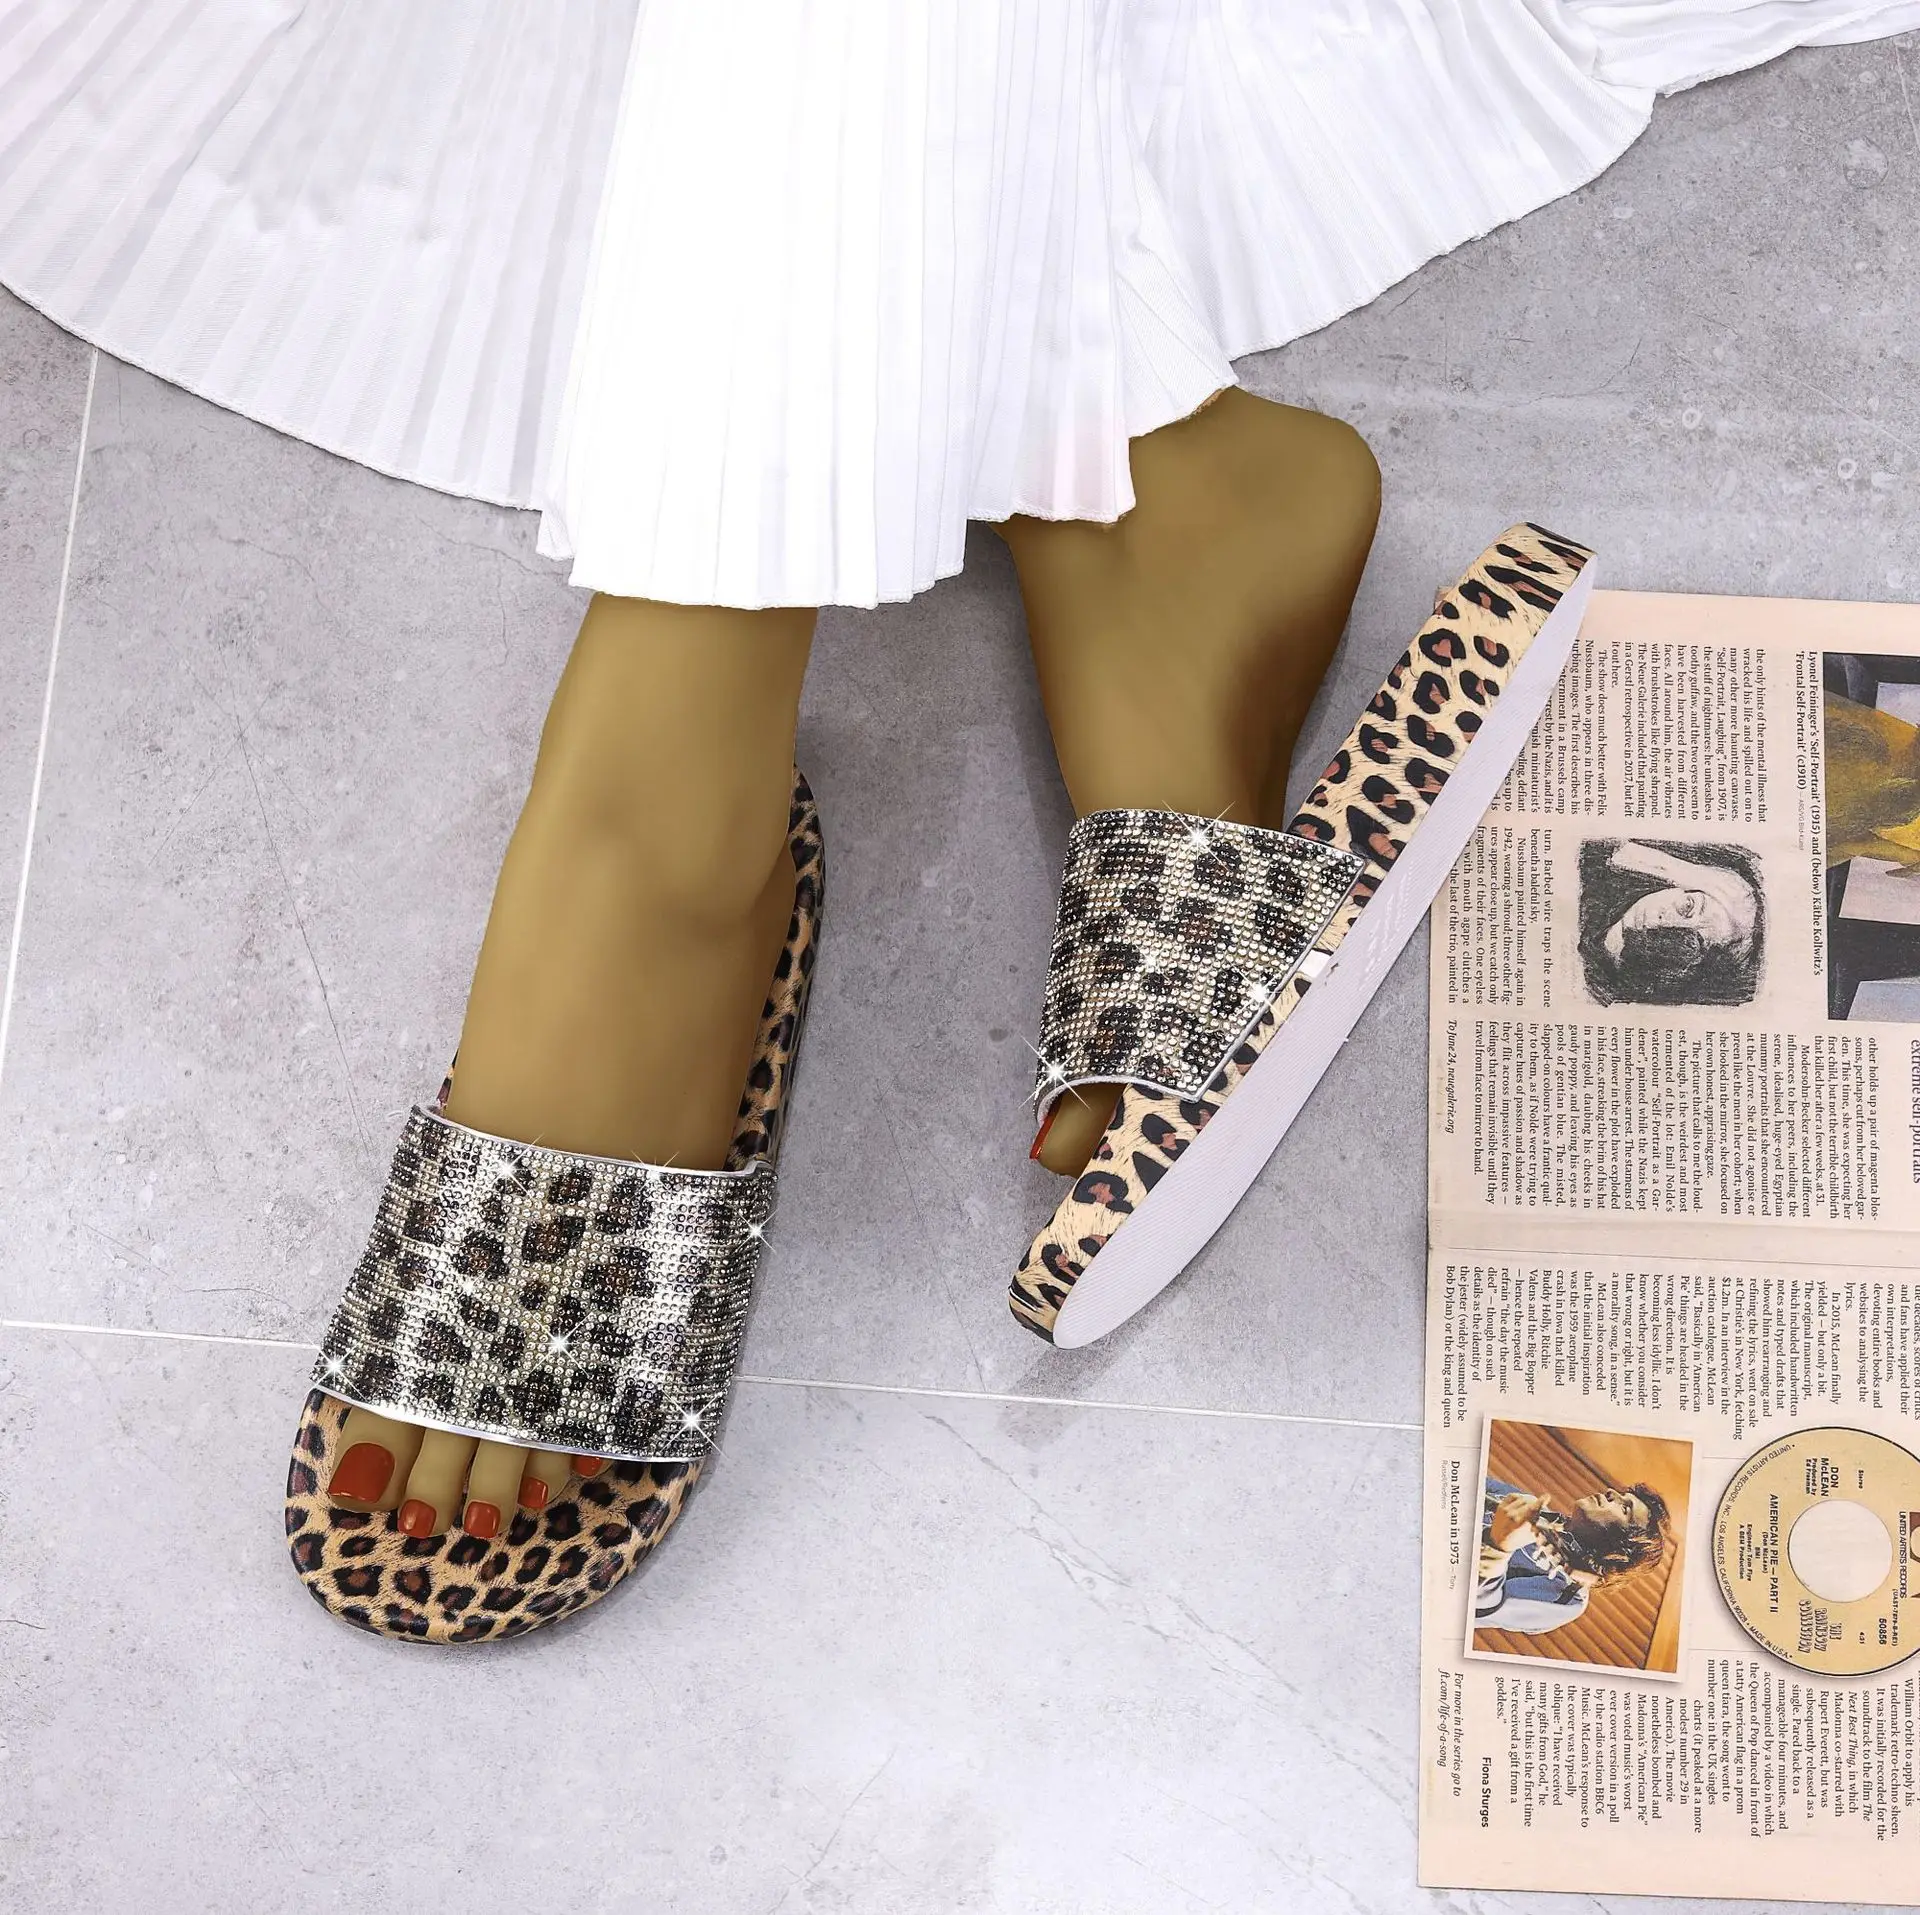 2022 Flip Flops Slippers Women"e;s Shoes Pvc Leopard Print Fashion Rhinestone Flat Slippers